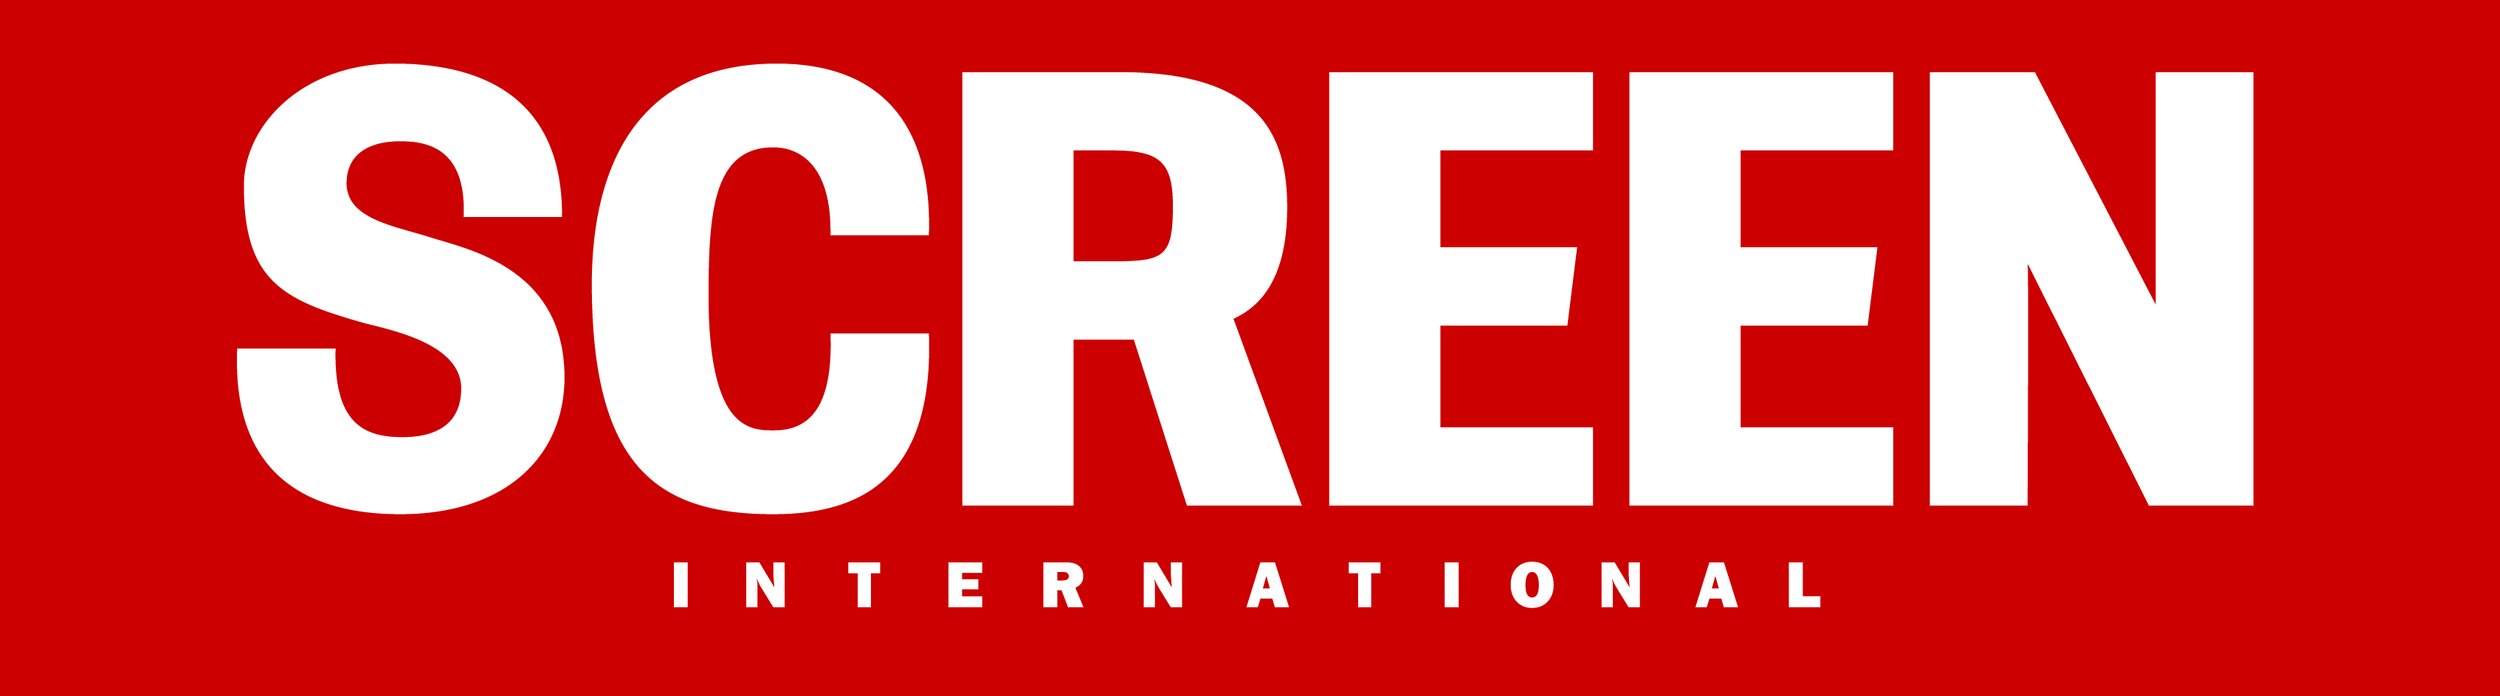 Screen International logo-white out red.jpg